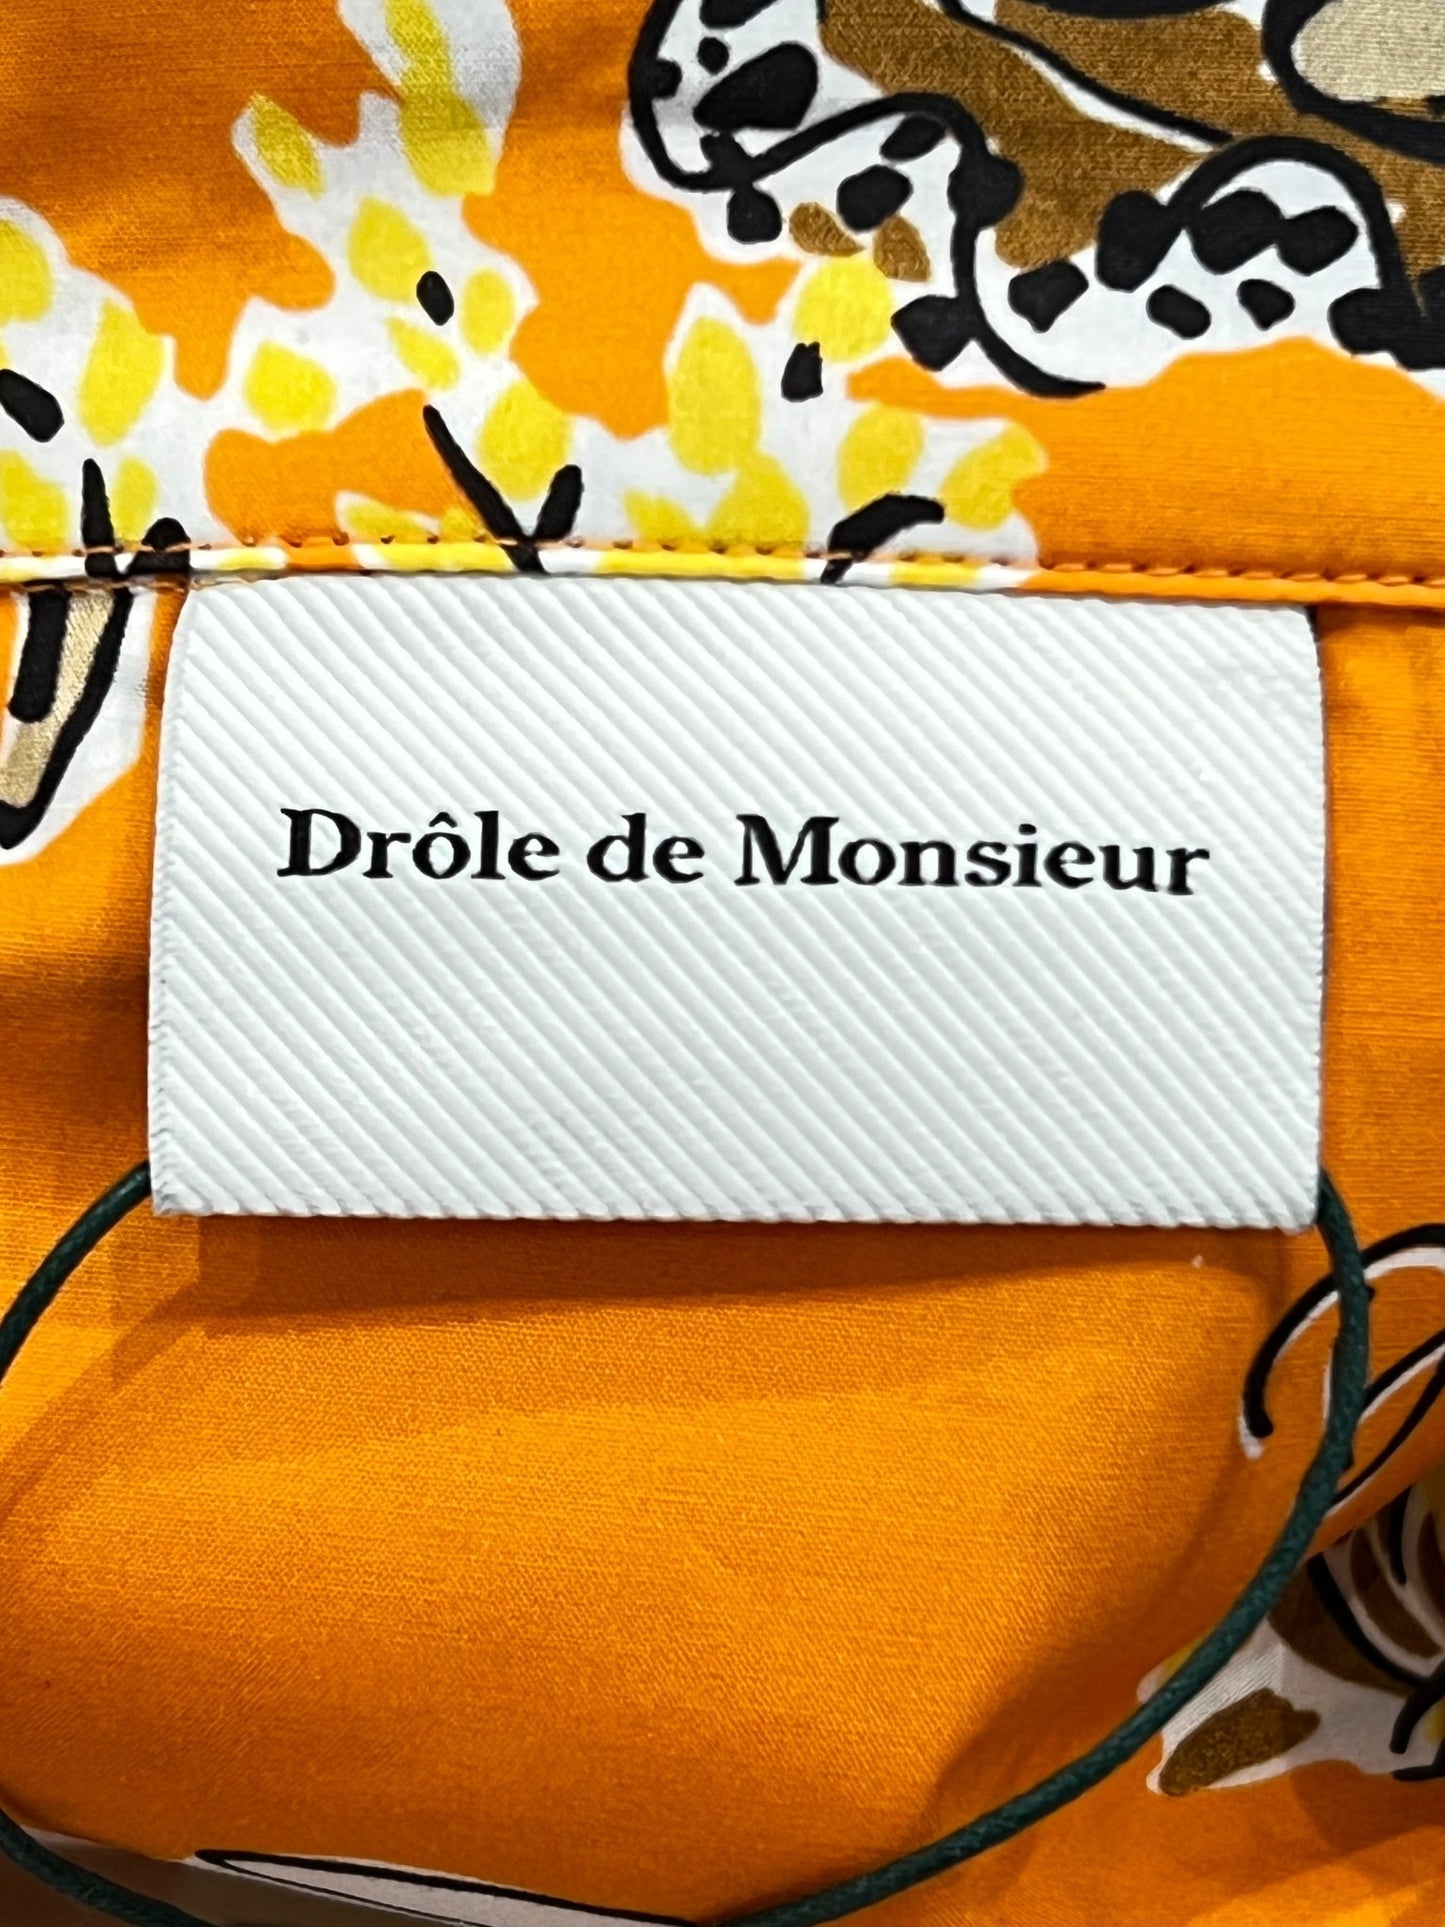 A close-up of a DROLE DE MONSIEUR SHIRT D-SH170-CO128 LA CHEMISE TERRASSE OR on a textured orange short sleeve shirt with a leopard print pattern.